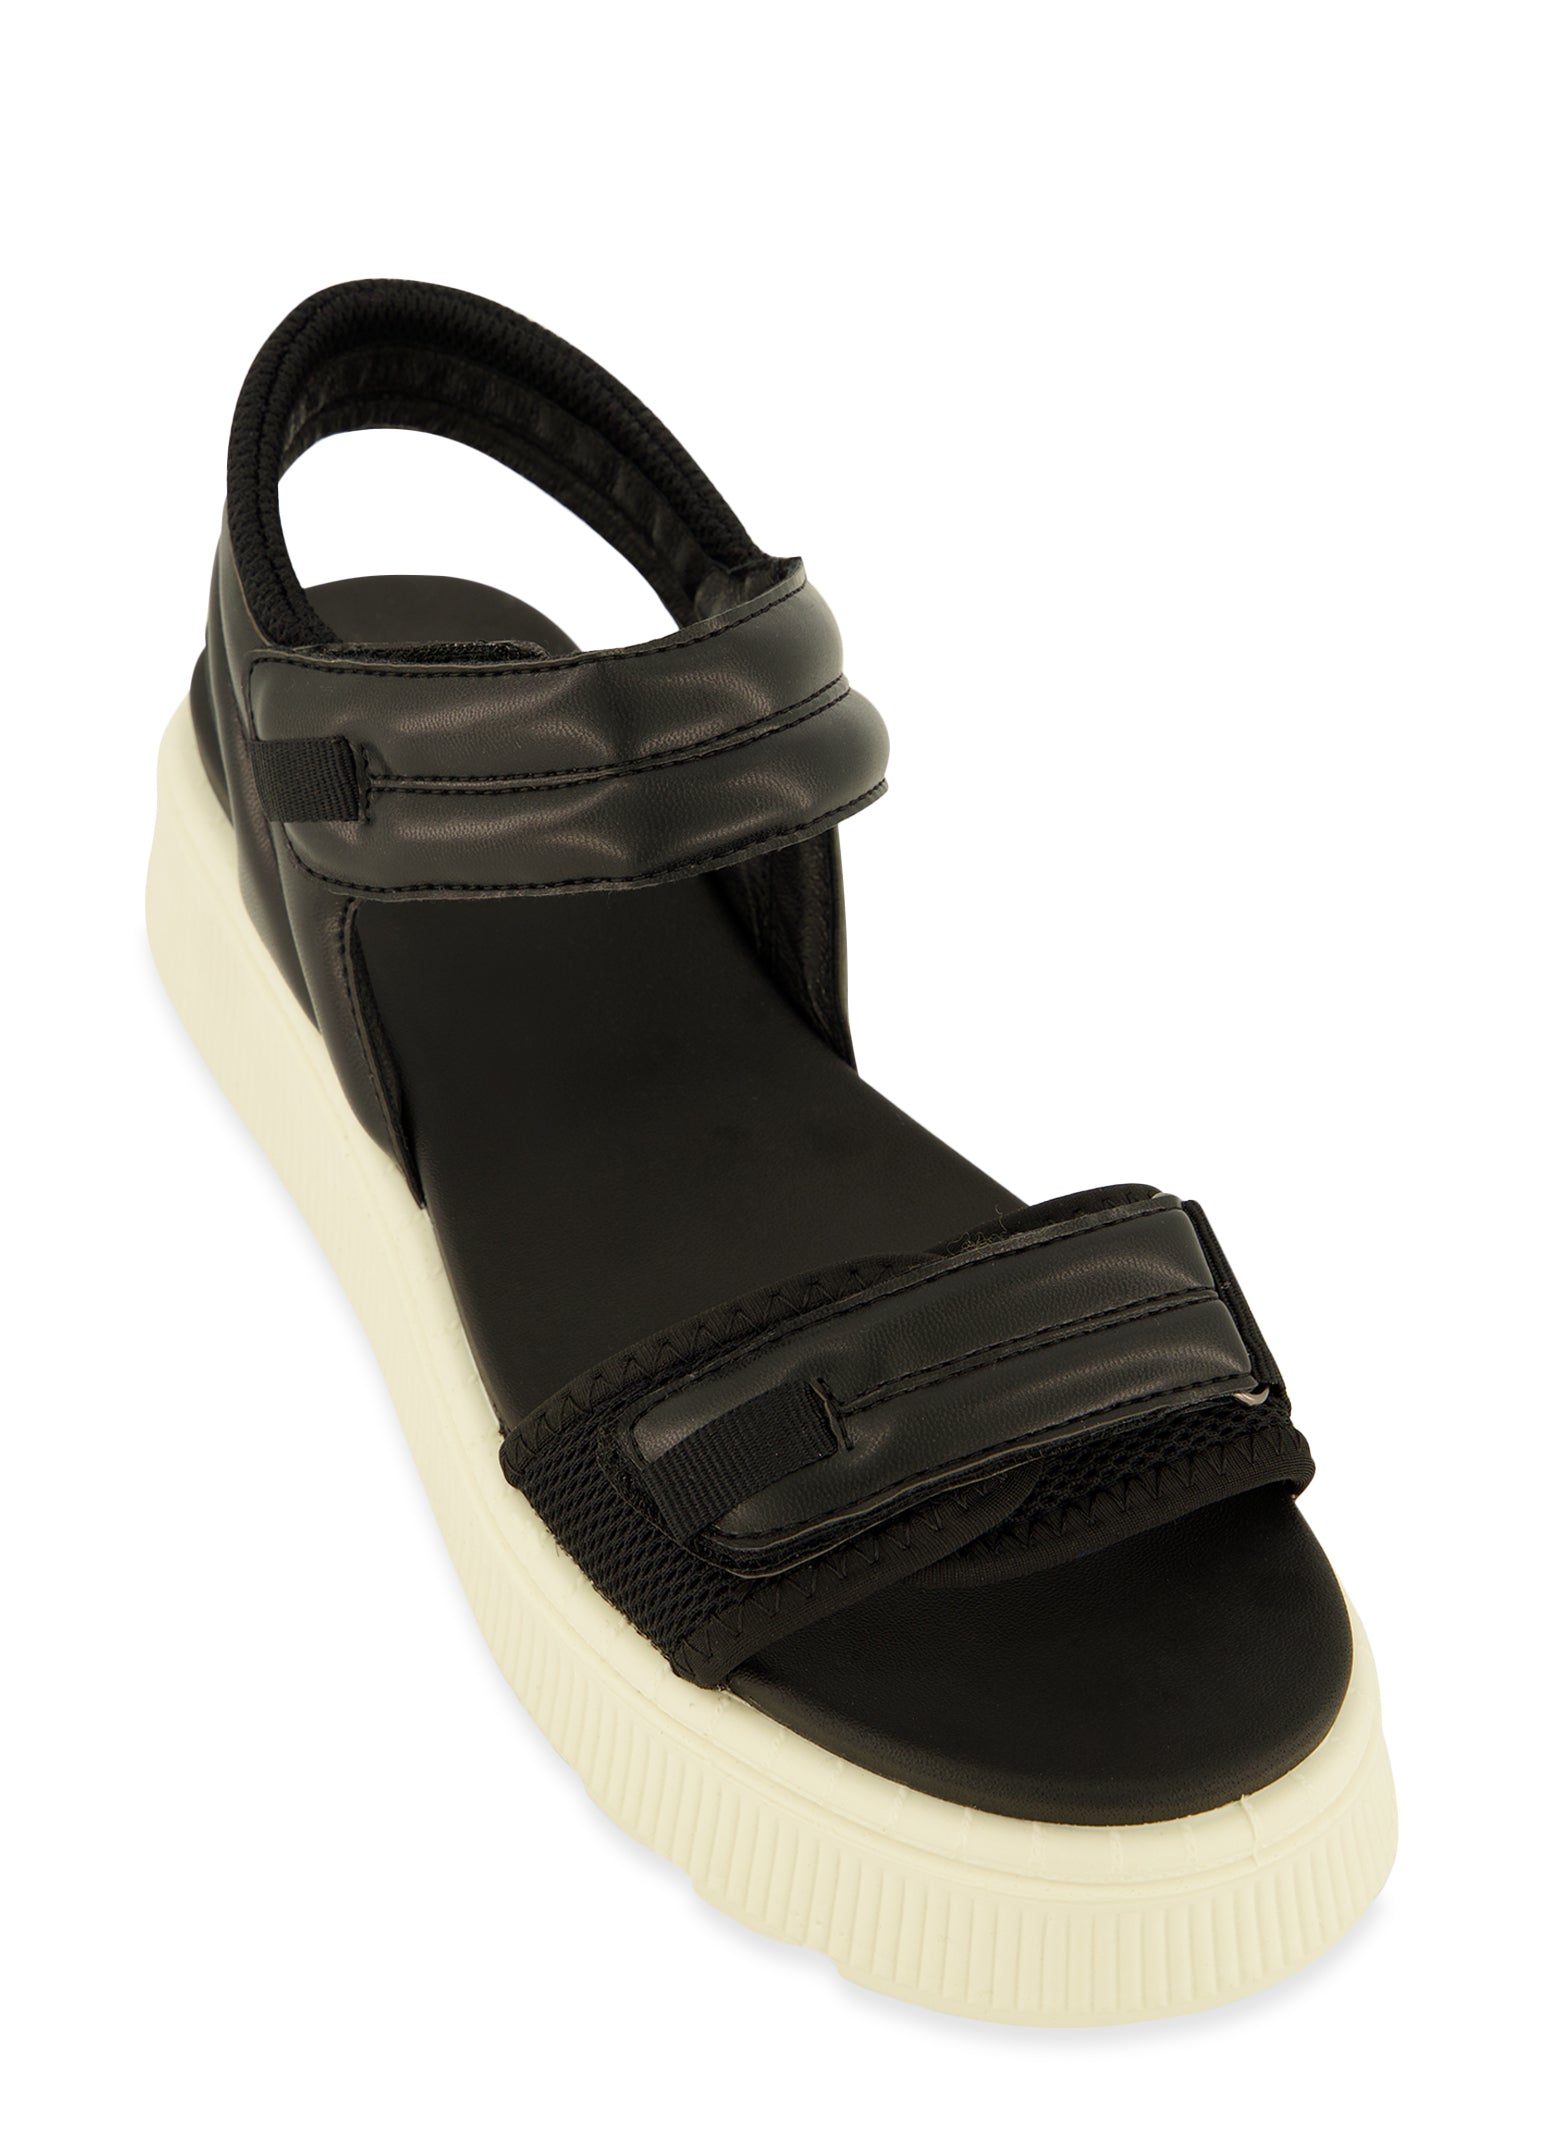 Womens Velcro Band Ankle Strap Platform Sandals,